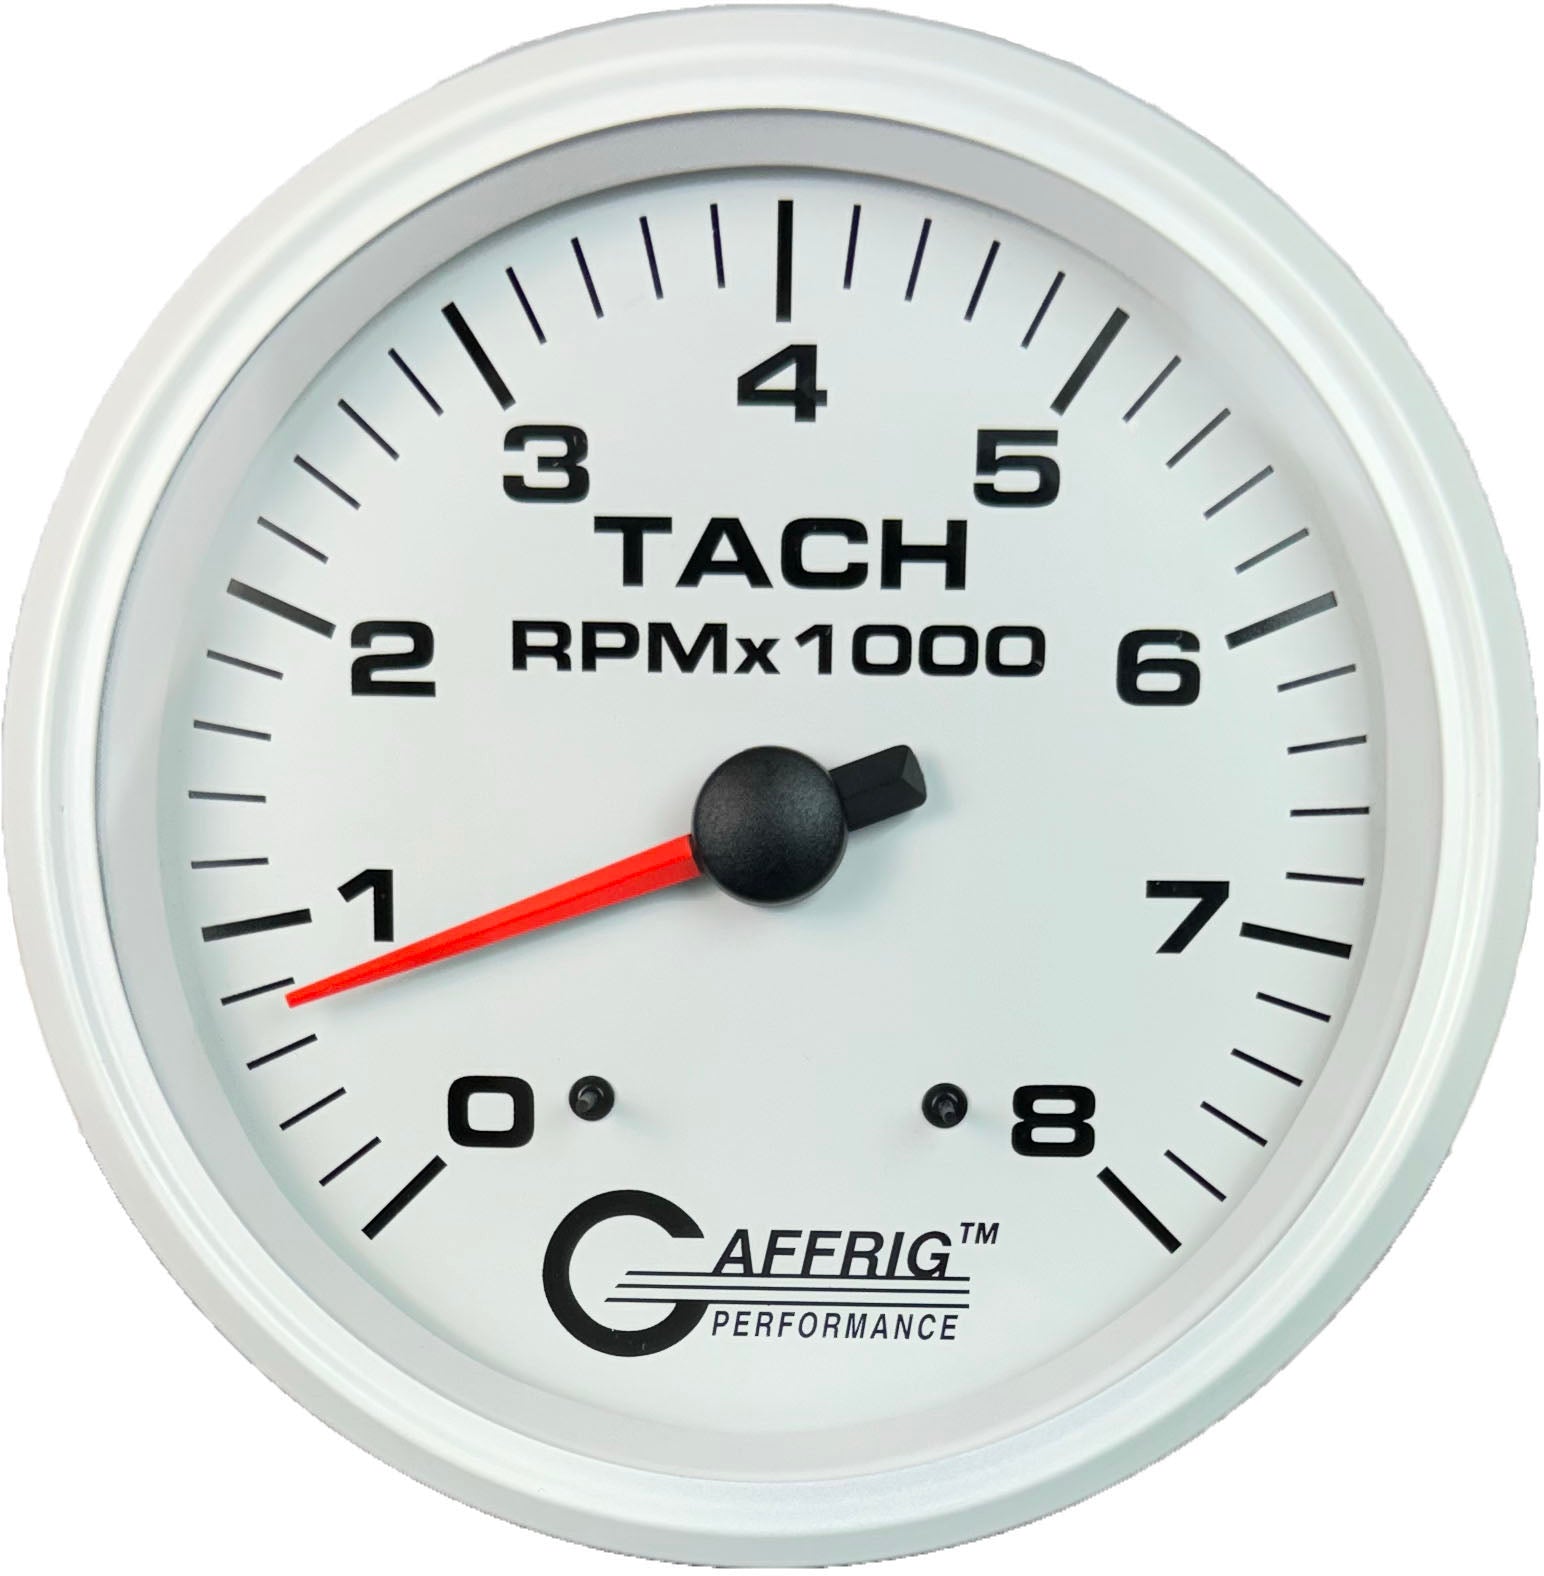 GAFFRIG PART #10019 4 5/8 INCH ELECTRIC TACHOMETER GAUGE 0-8000 RPM WHITE NO FAT RIM (STANDARD)